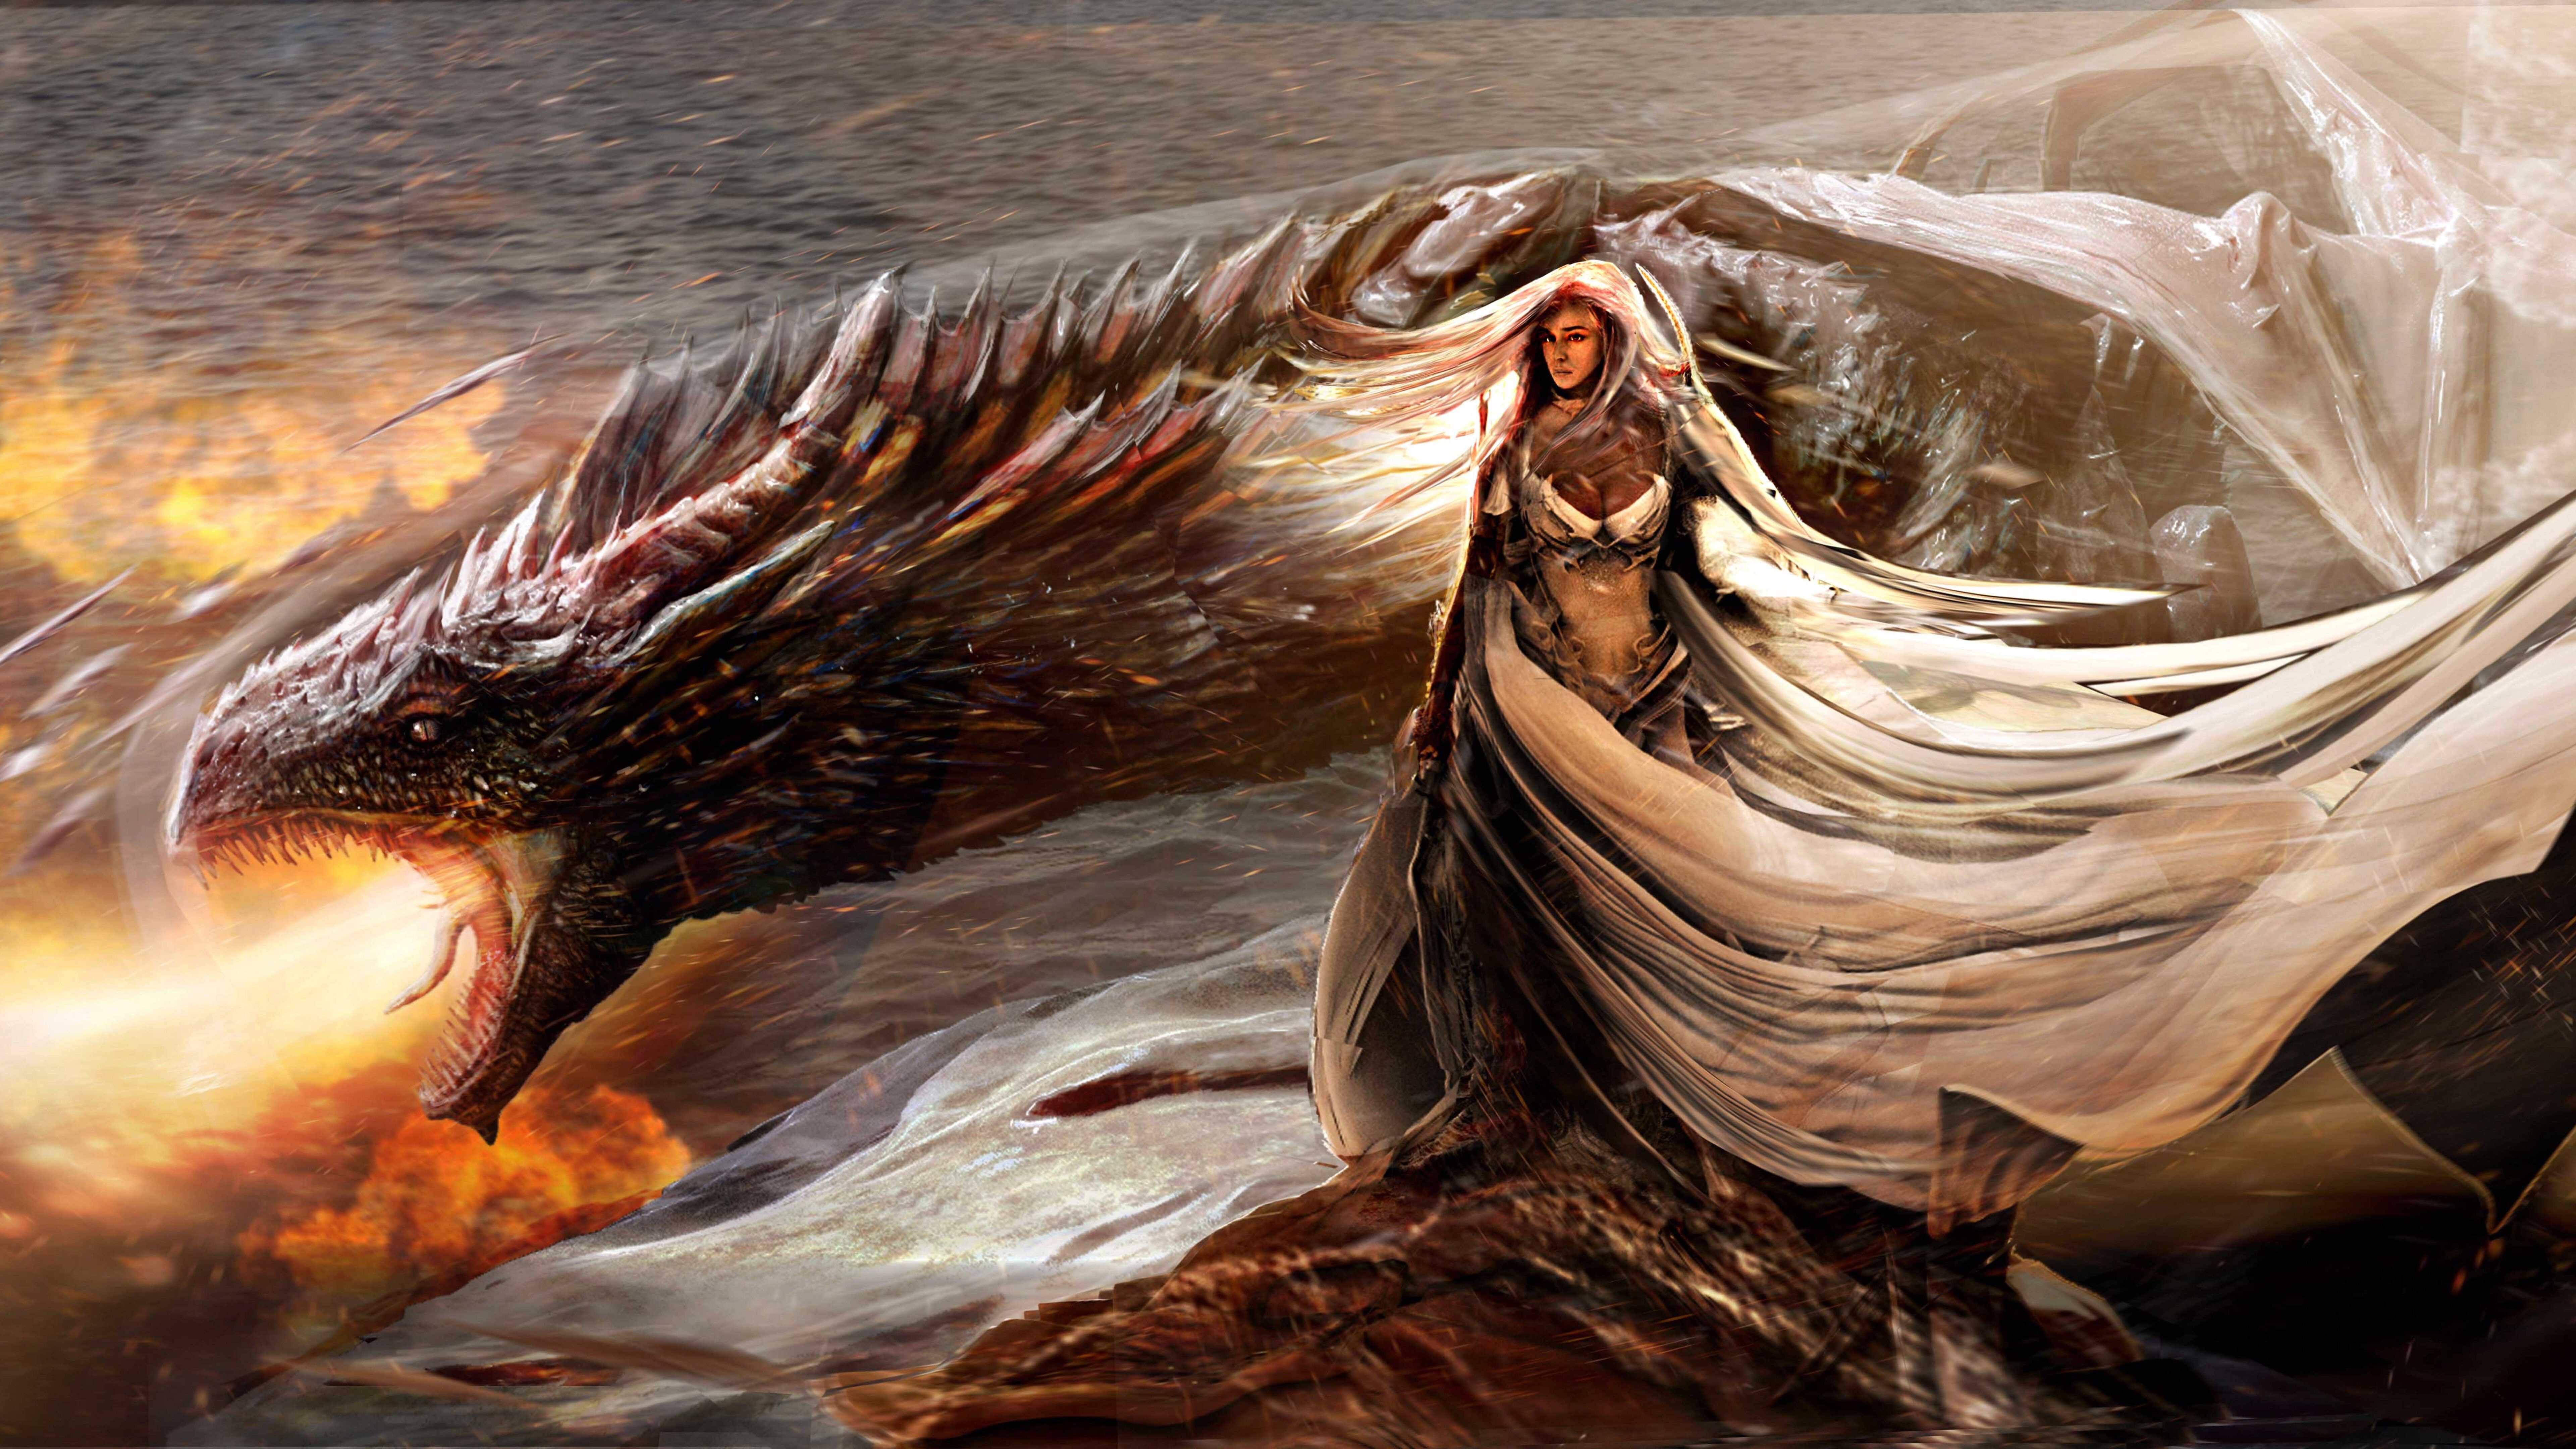 Khaleesi Daenerys Targaryen Game of Thrones 4K Wallpapers  HD Wallpapers   ID 21713